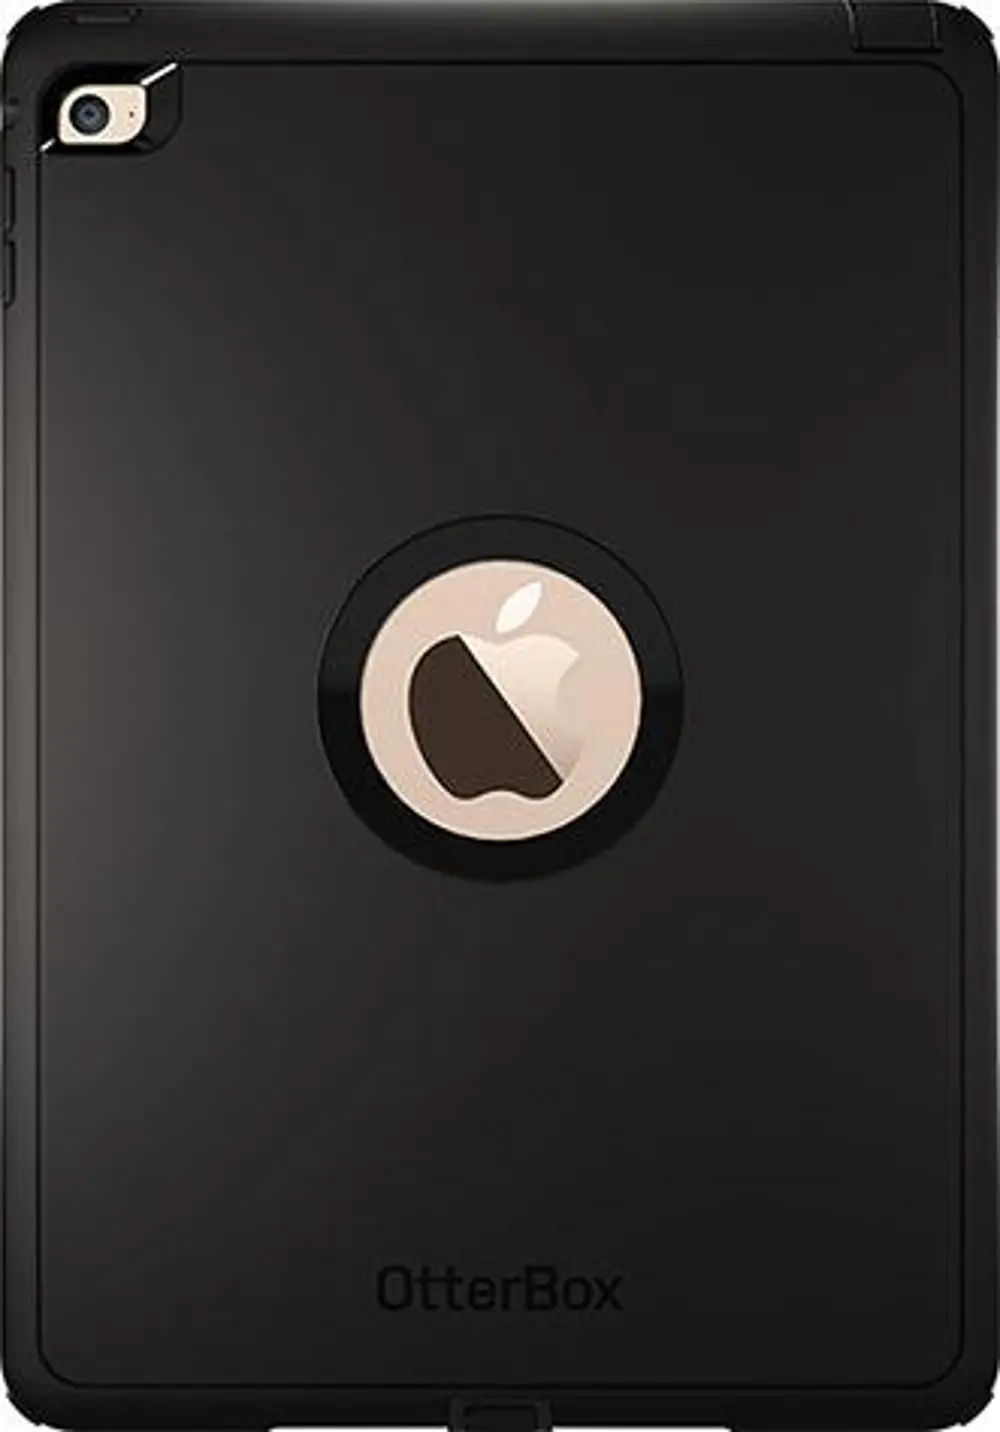 77-50969 iPad Air 2 OtterBox Defender Series Case - Black-1